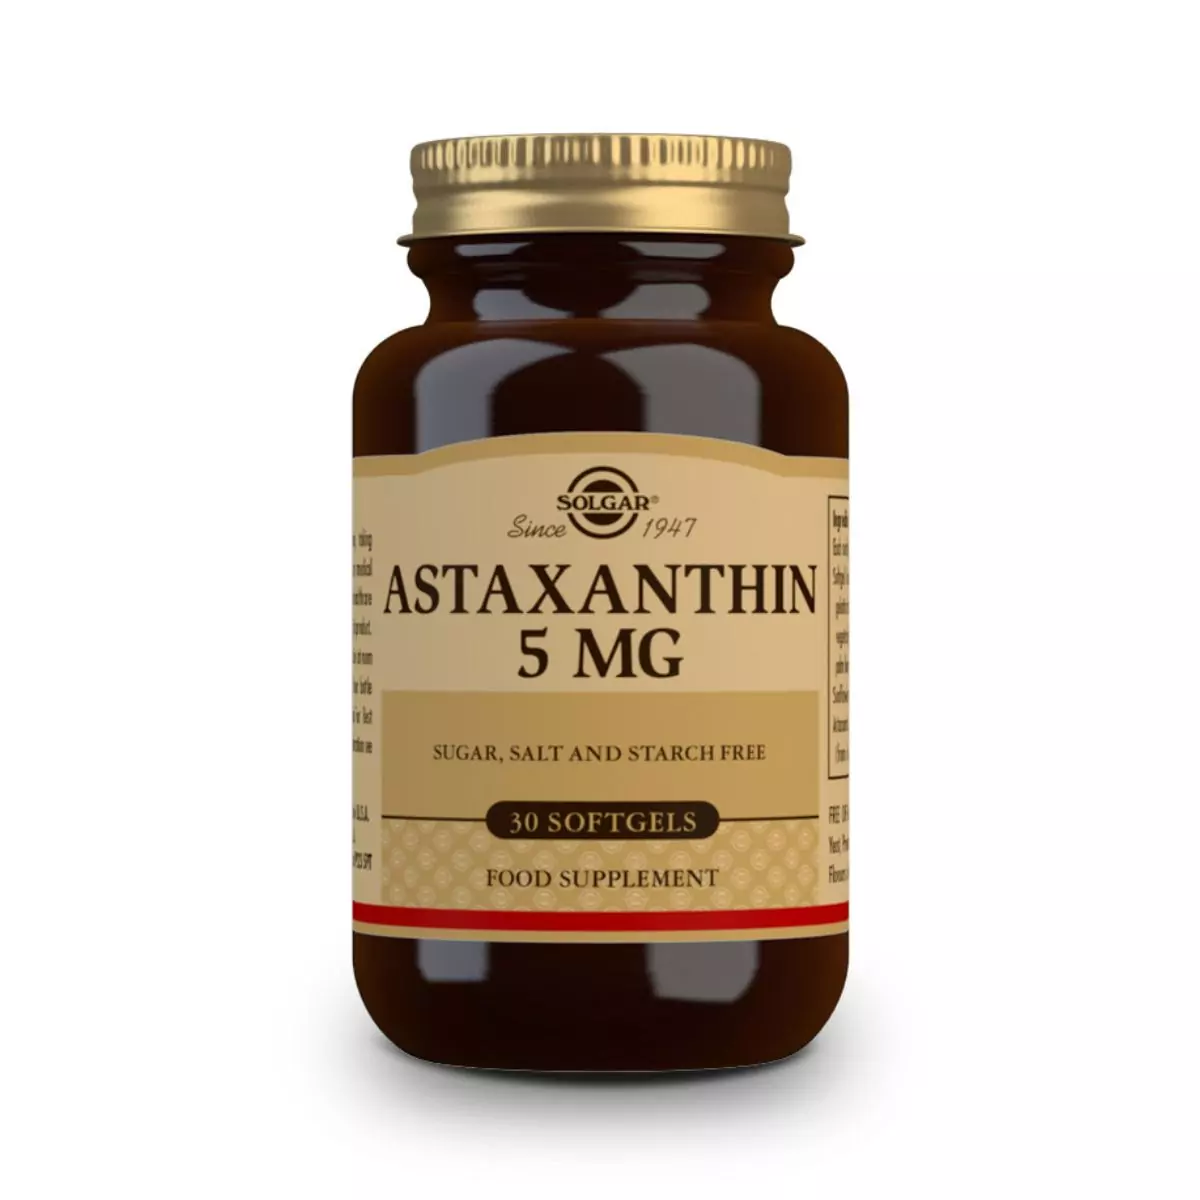 Complejo de Astaxantina 5 mg – 30 Cápsulas de Gel Blandas